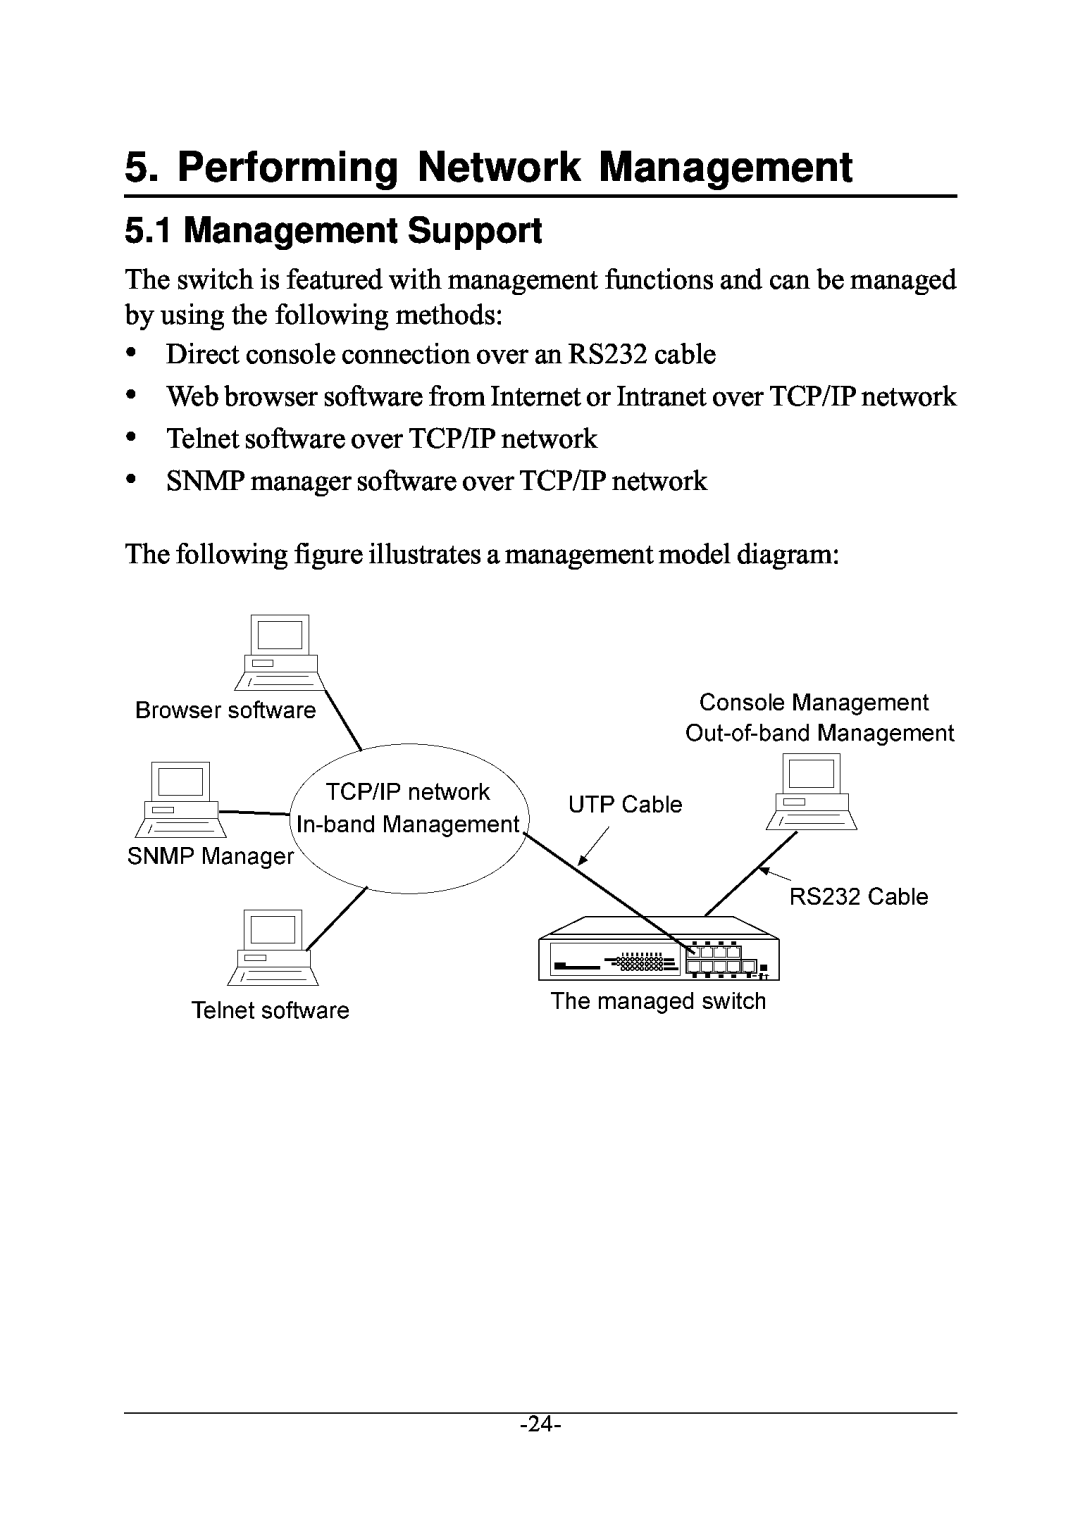 KTI Networks KS-801 manual Performing Network Management, Management Support 